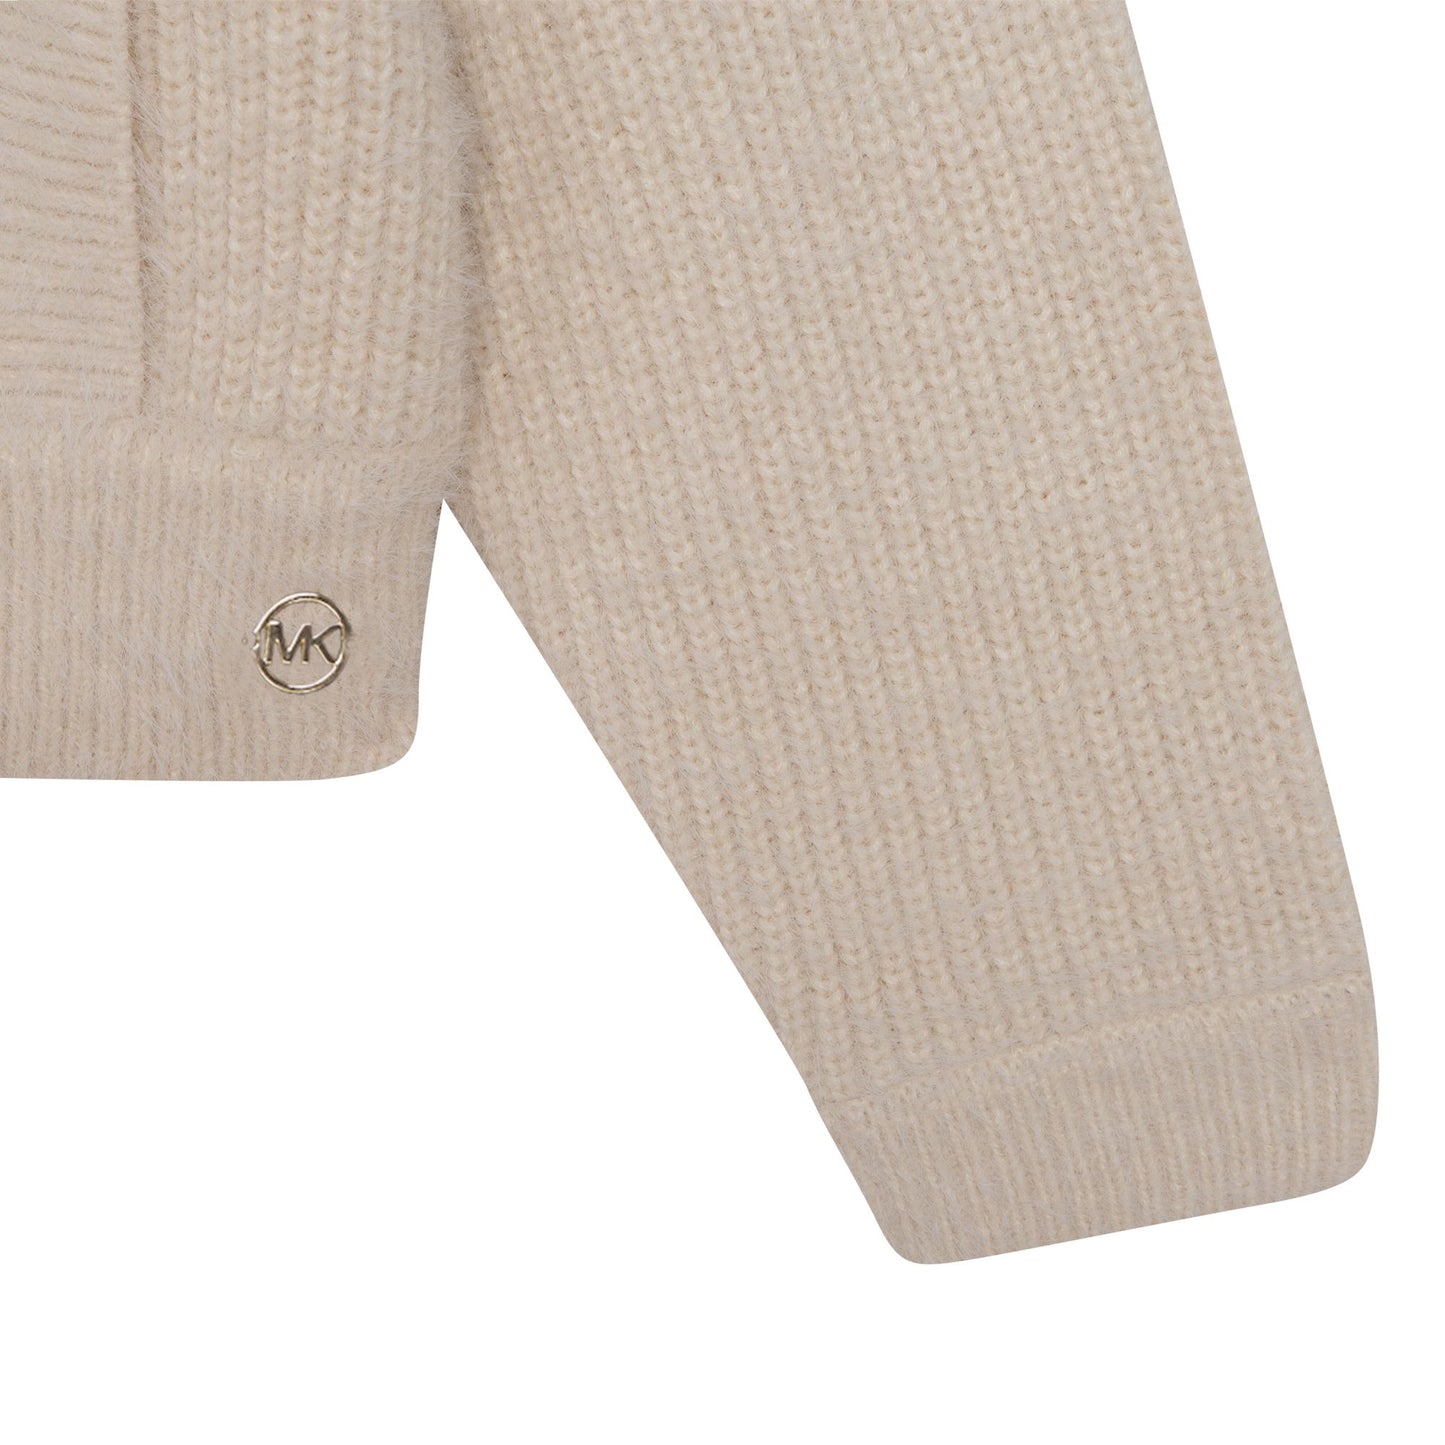 Michael Kors Knit Sweater _Cream R15147-148